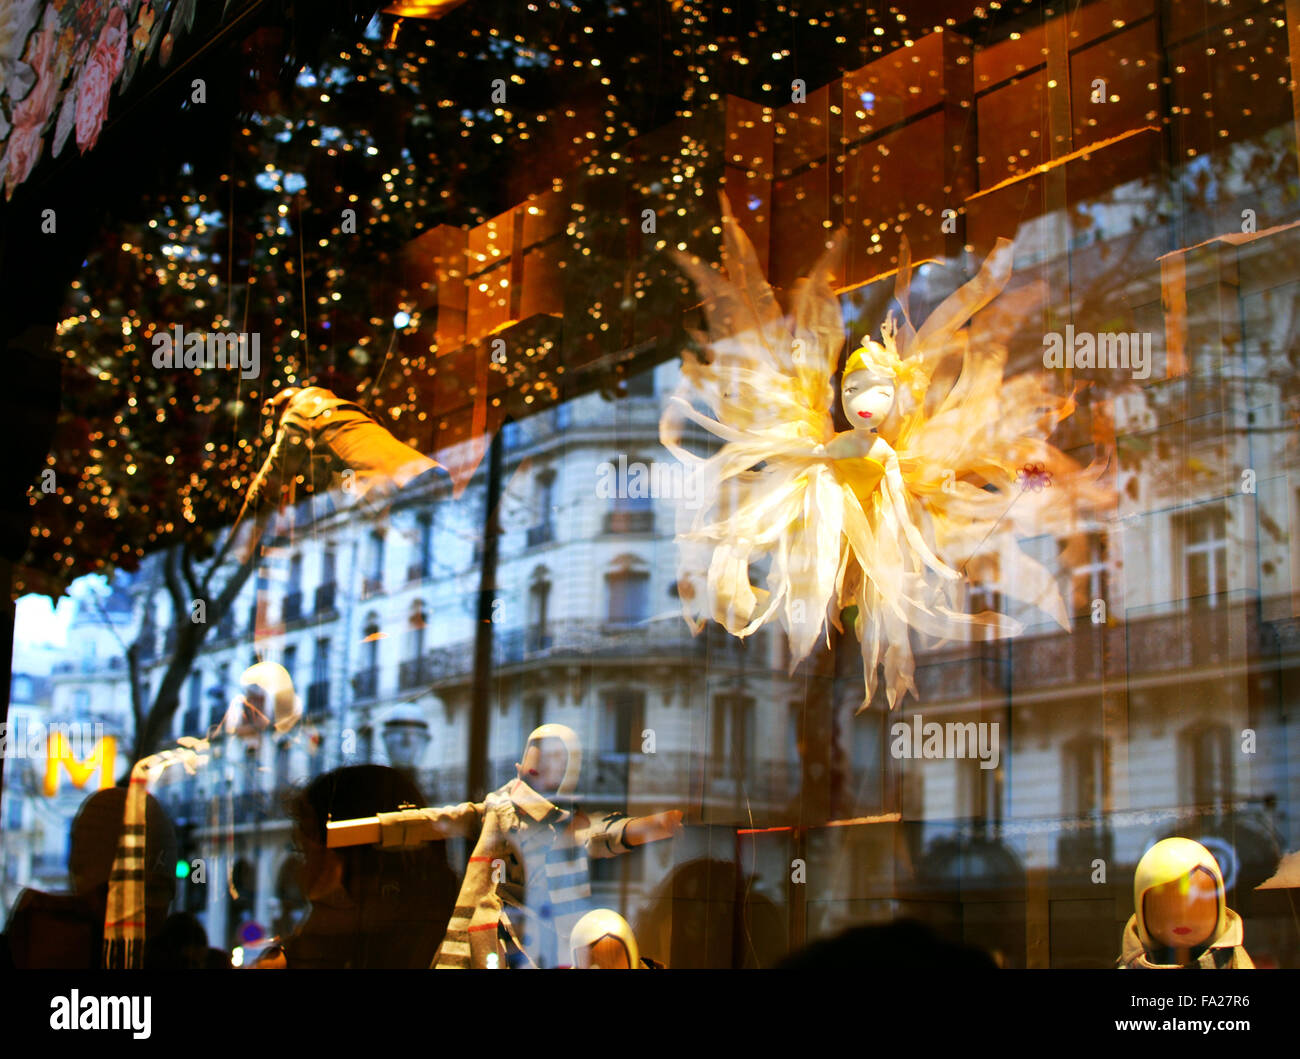 Galeries Lafayette Louis Vuitton Christmas Window Display Stock